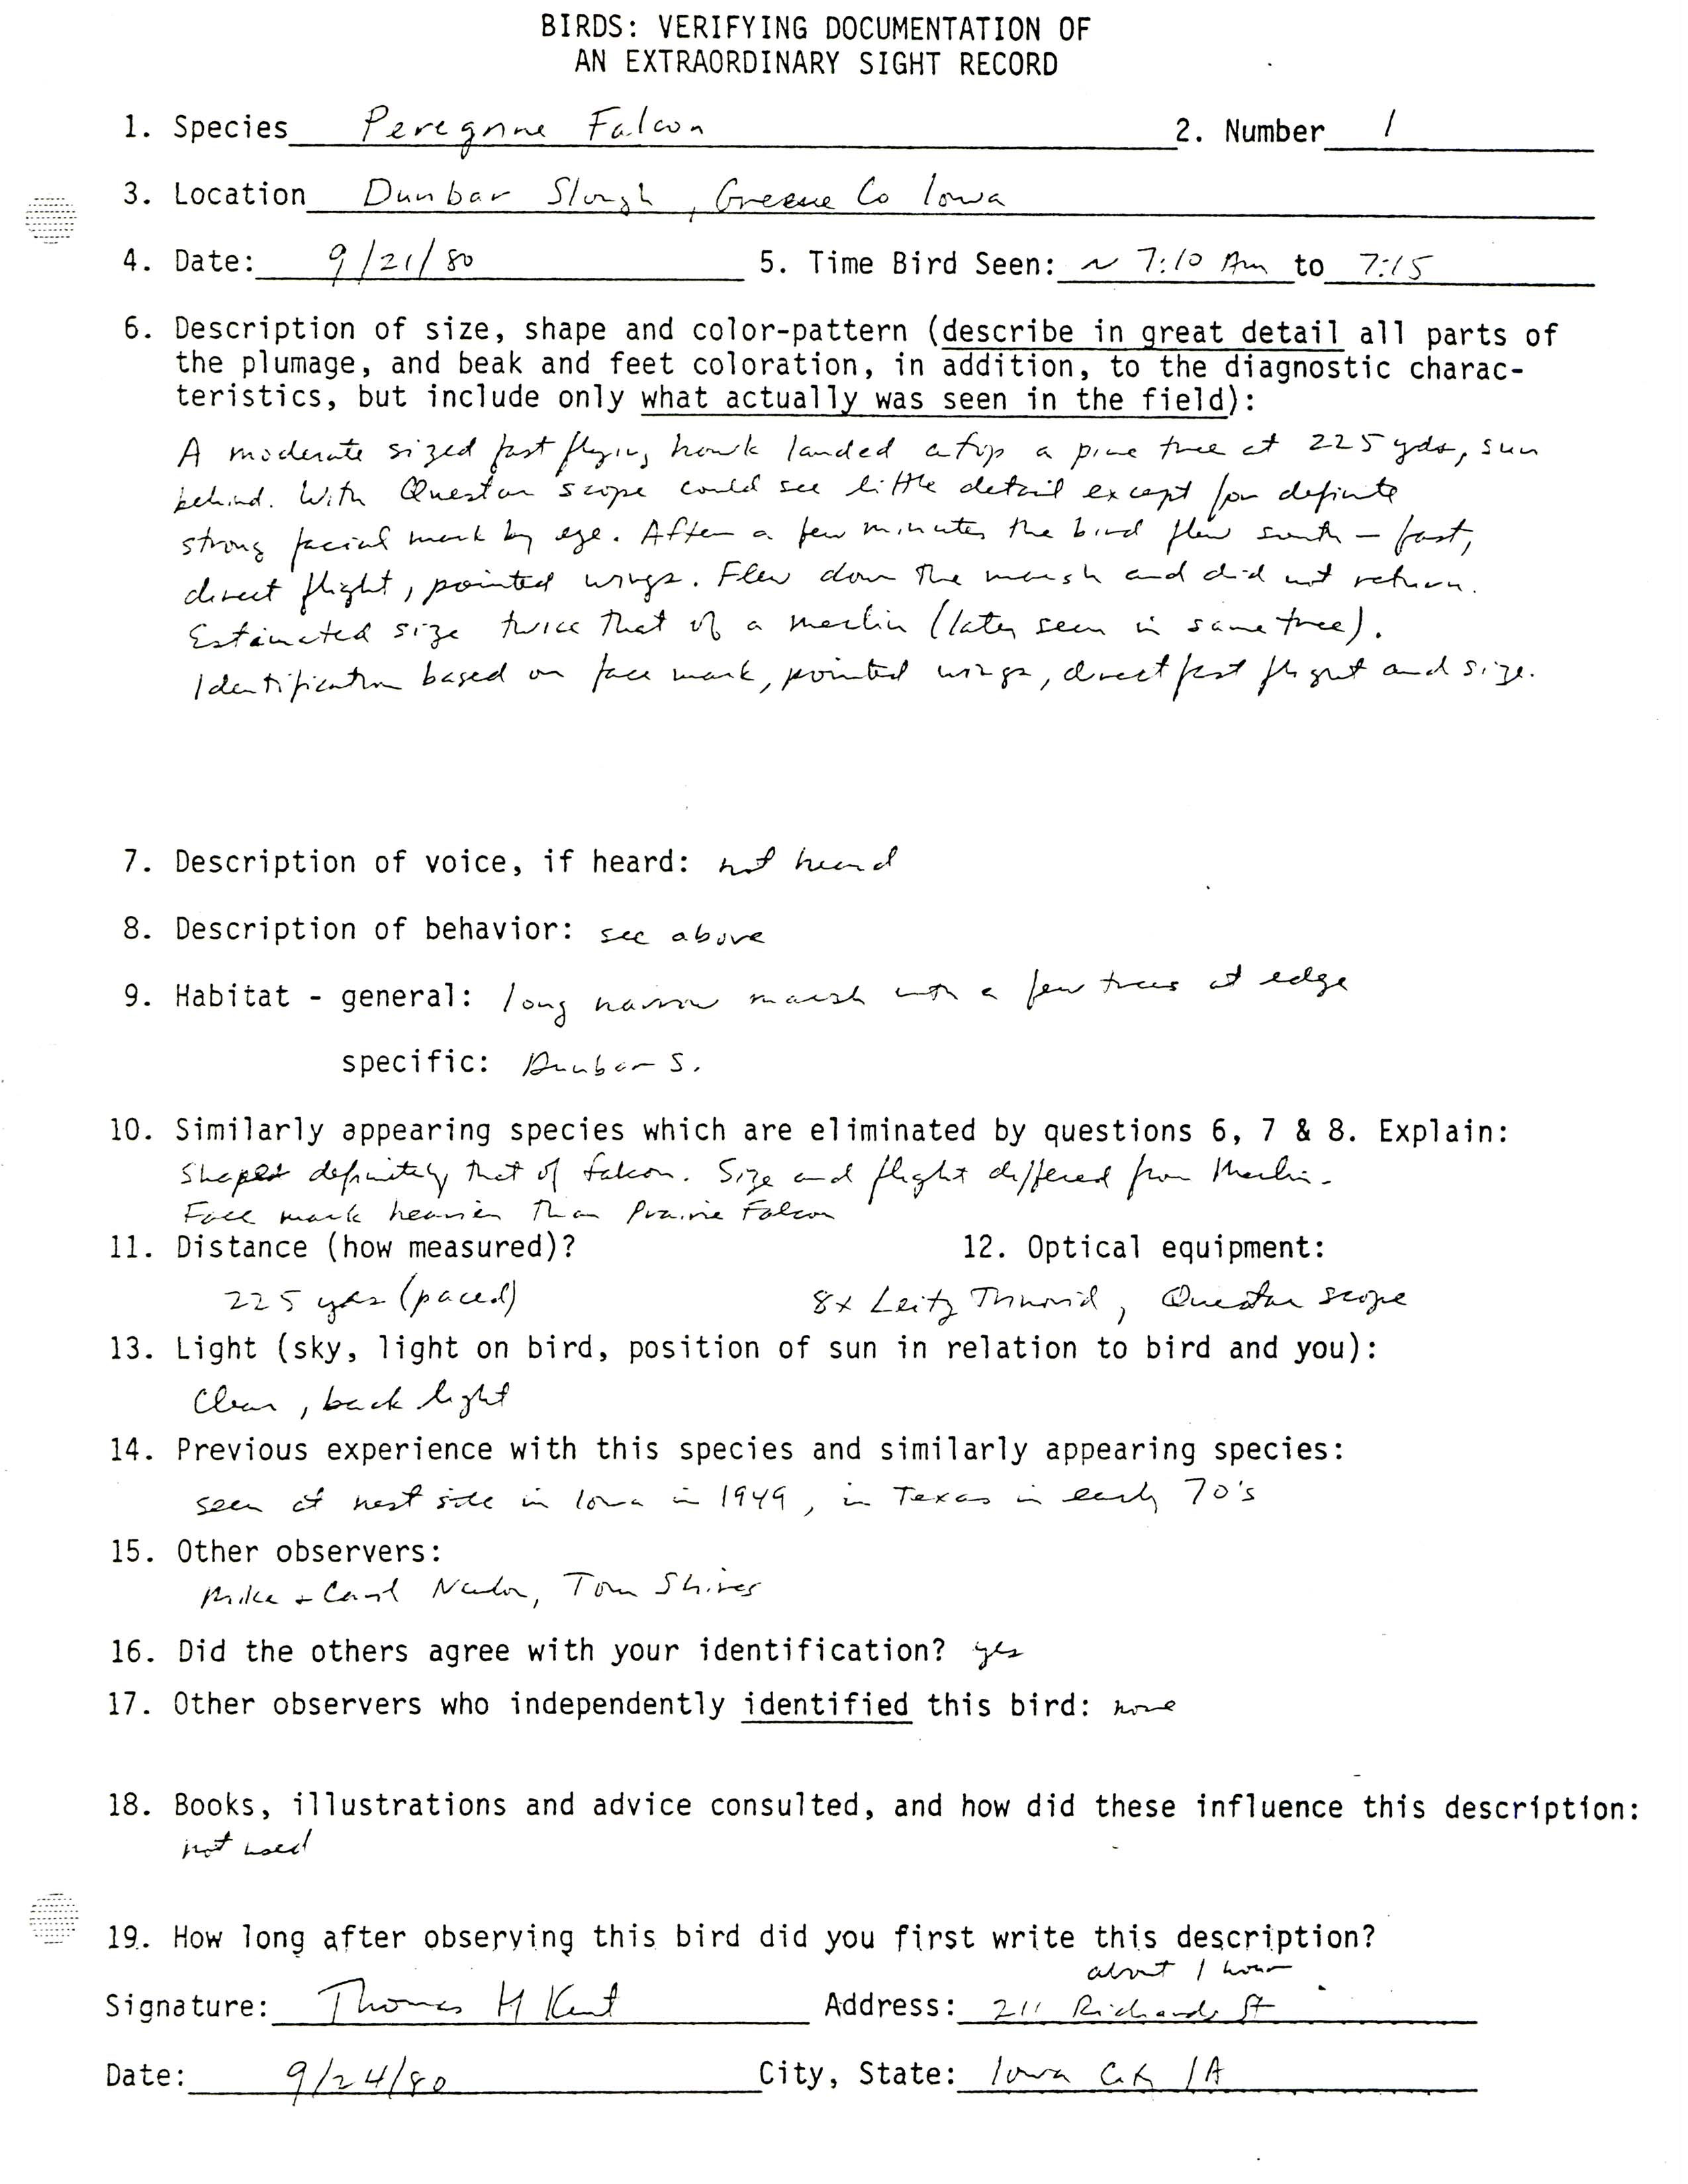 Rare bird documentation form for Peregrine Falcon at Dunbar Slough, 1980